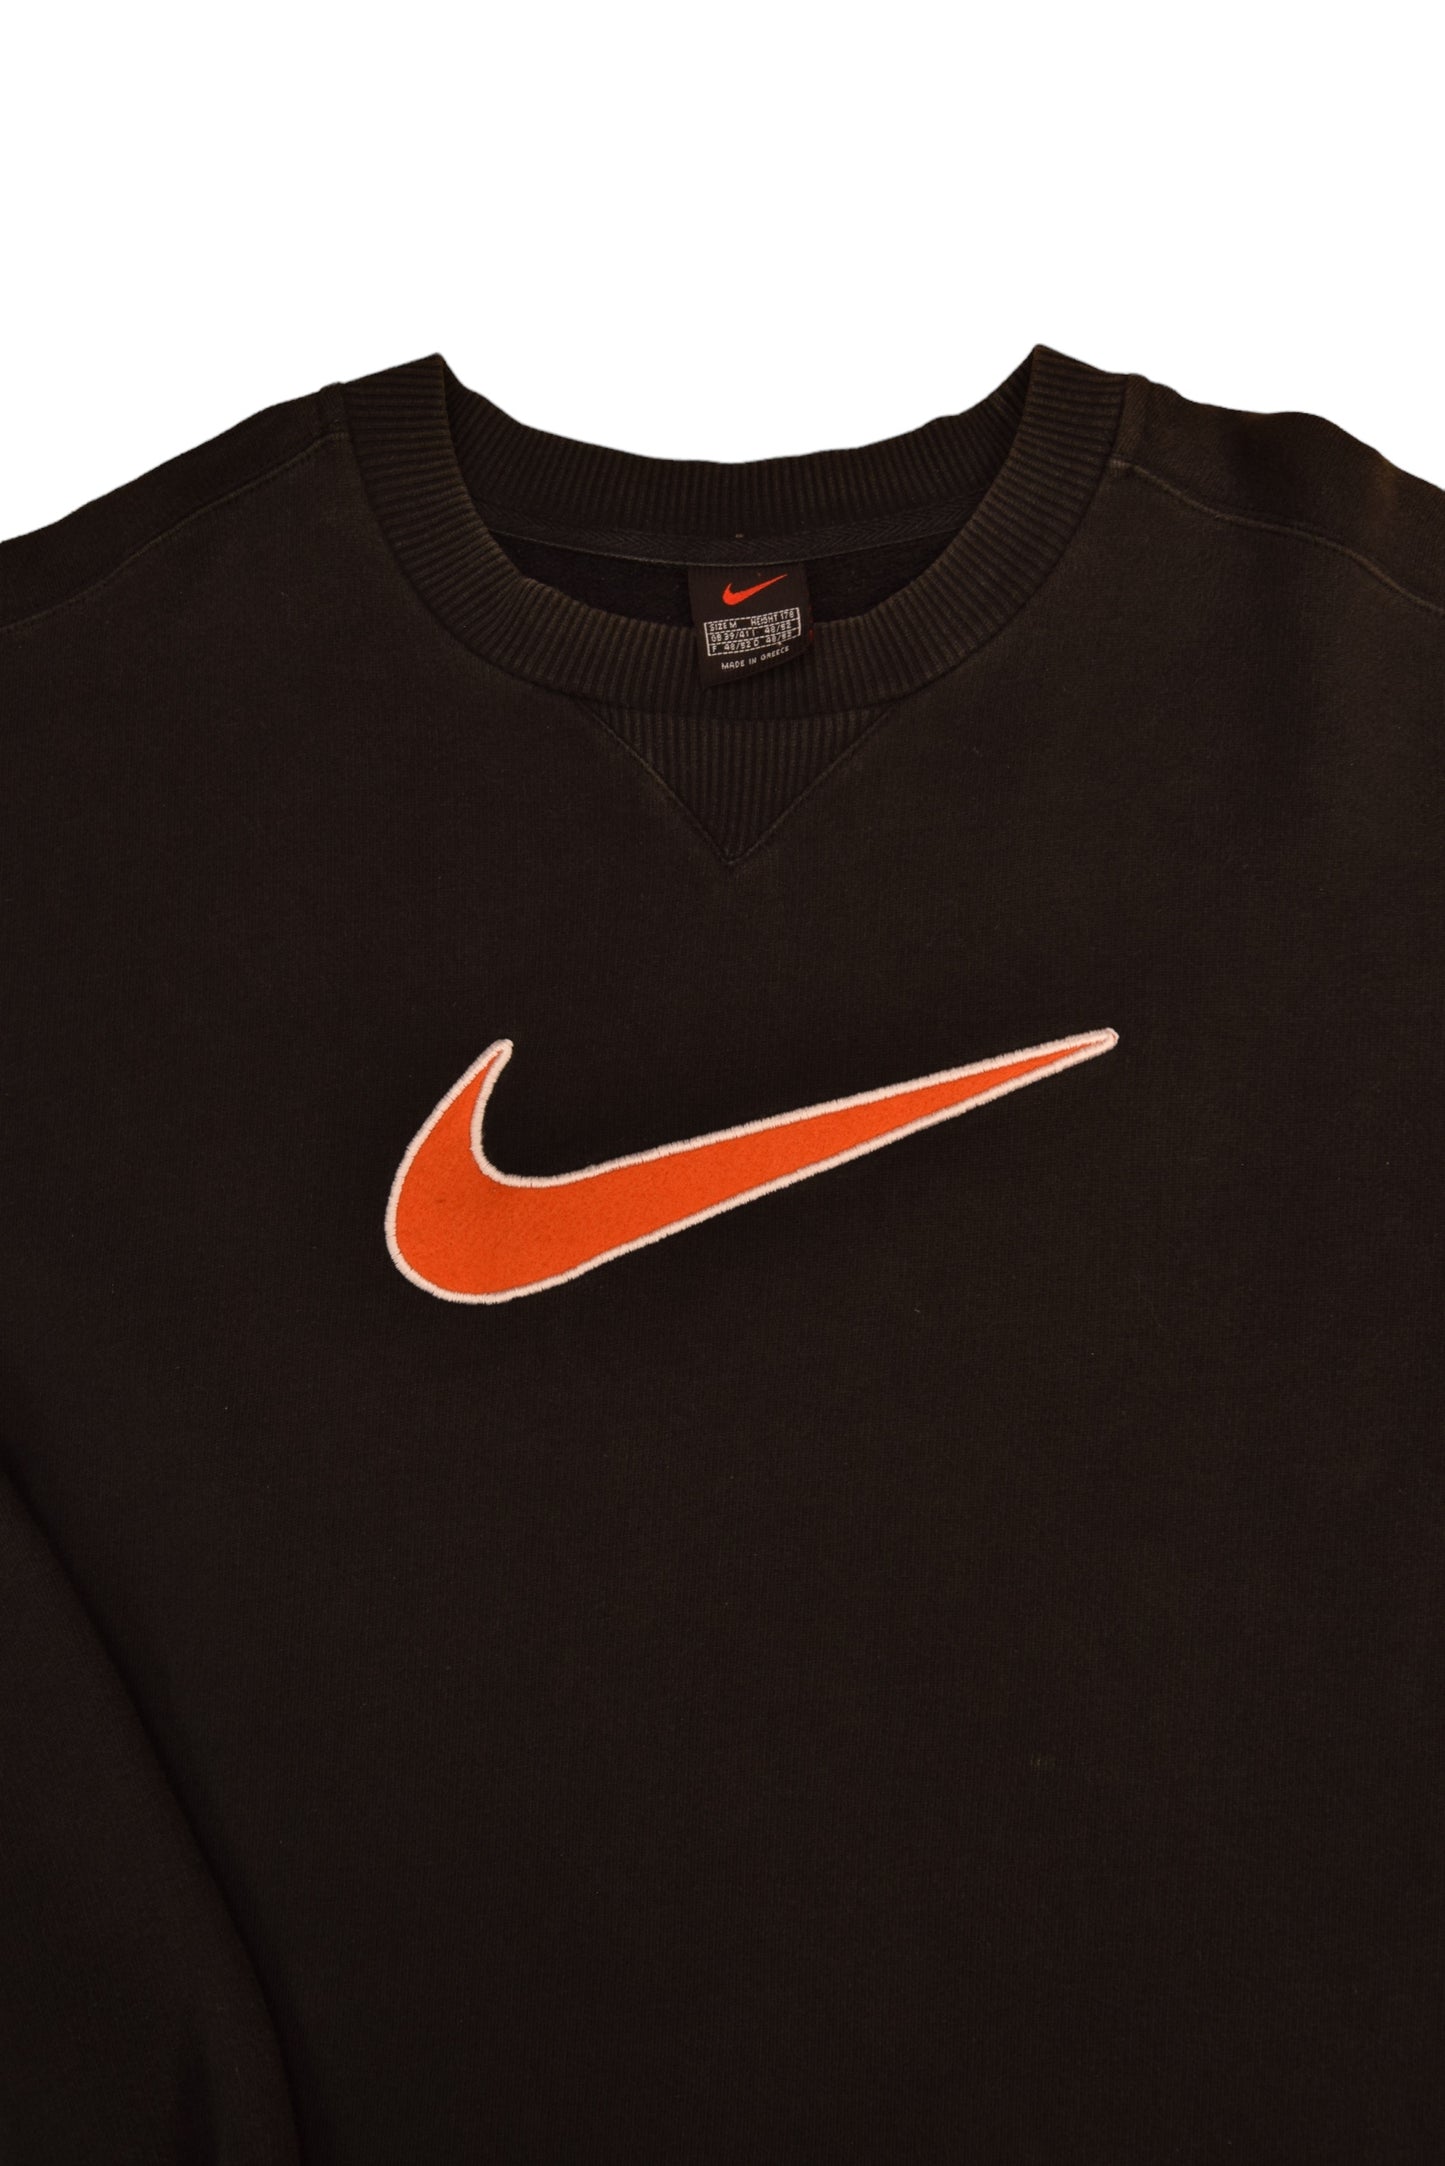 Vintage 90's Nike Sweatshirt Black Size M